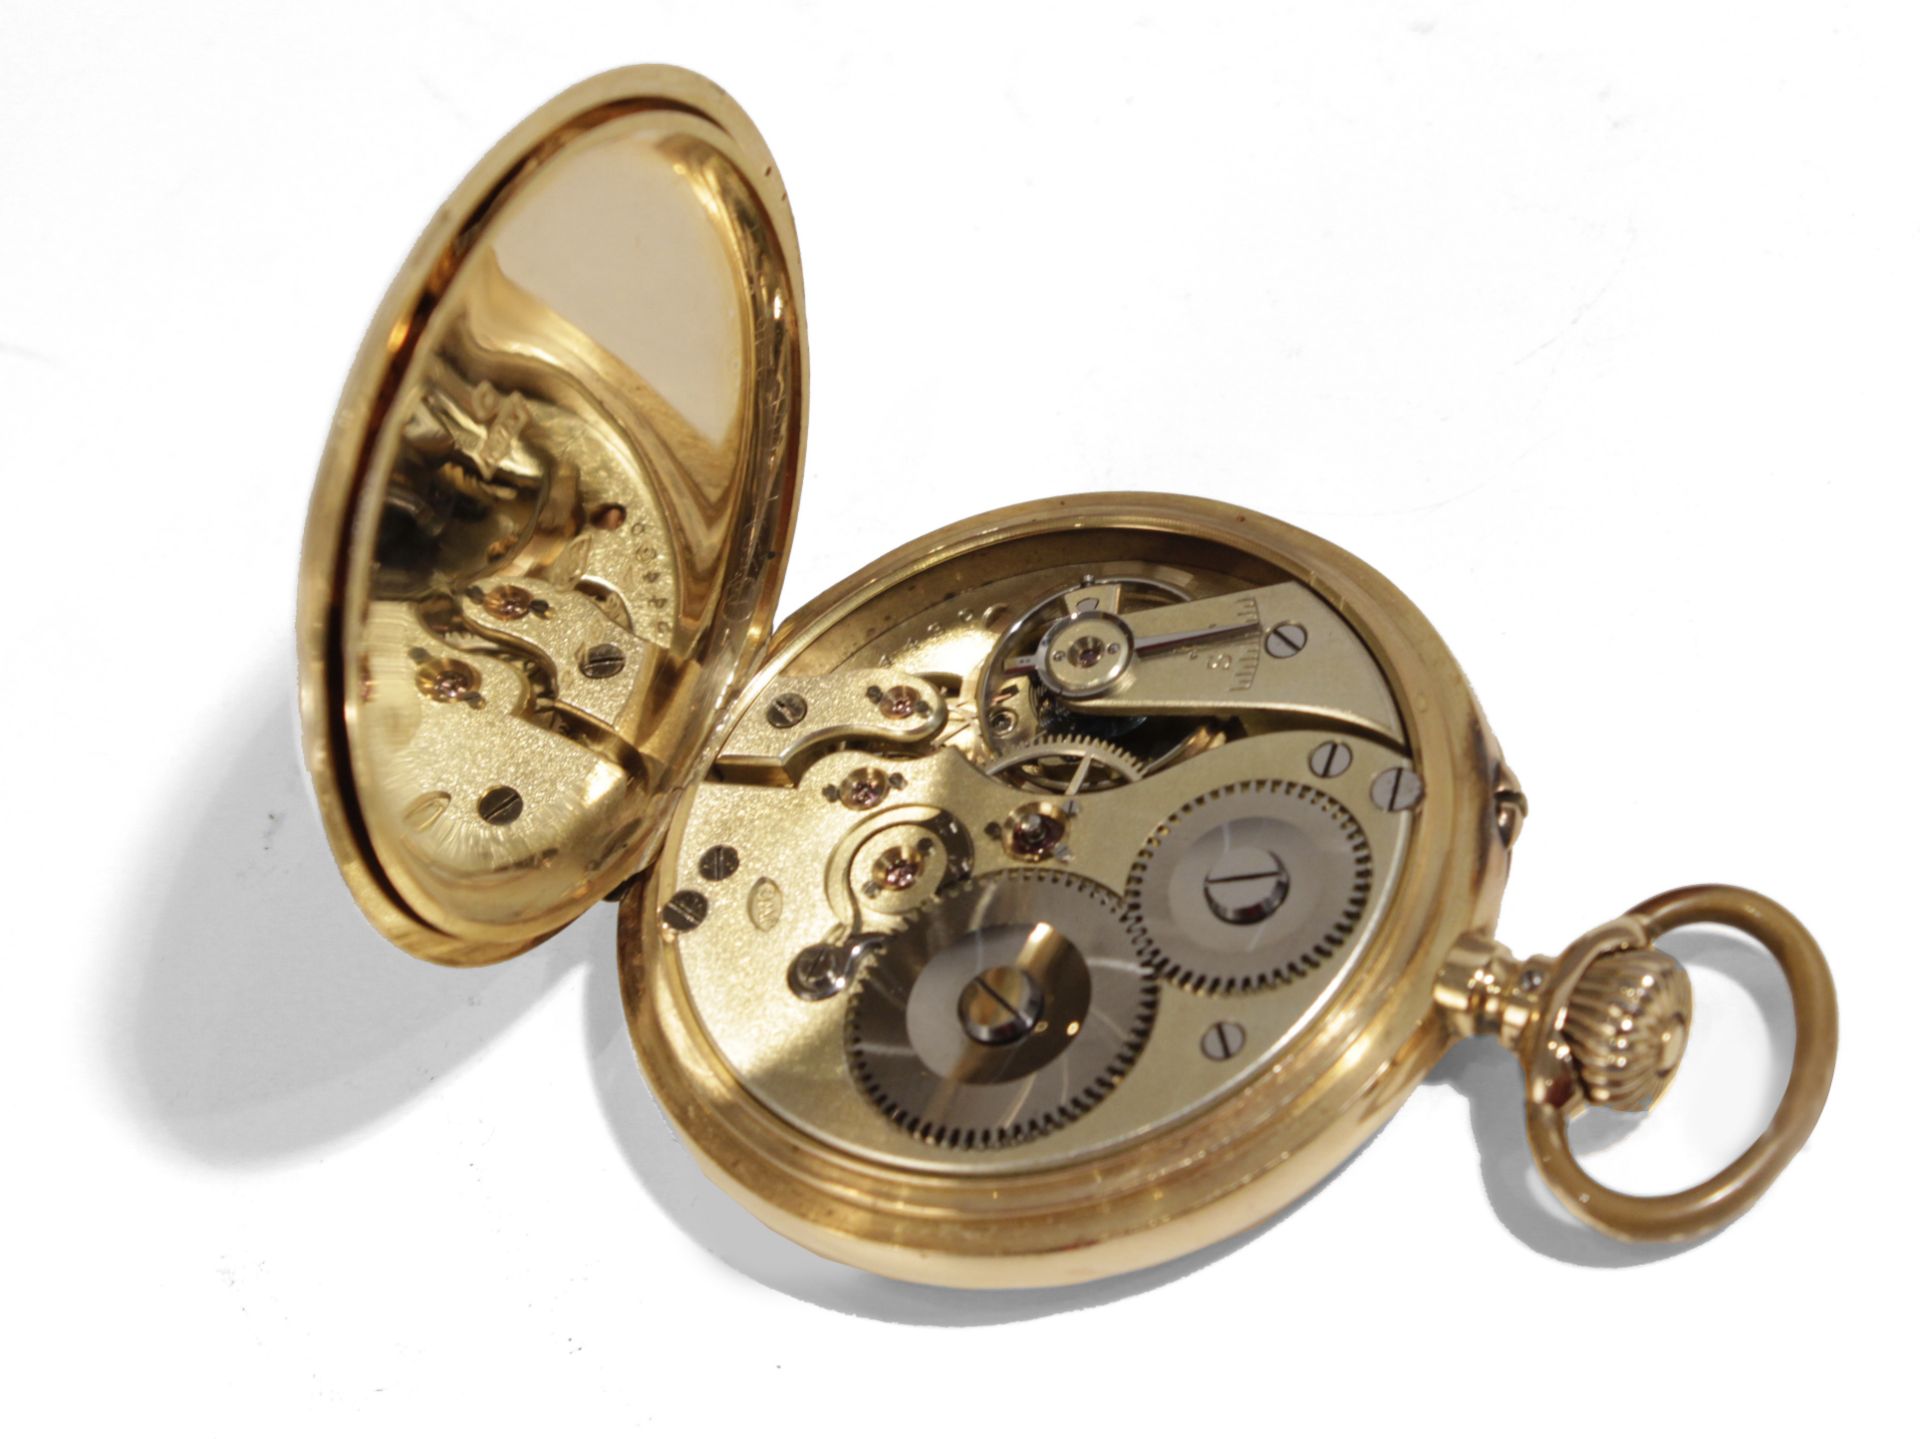 International Watch Company. An 18k. yellow gold open face pocket watch circa 1900 - Image 2 of 2